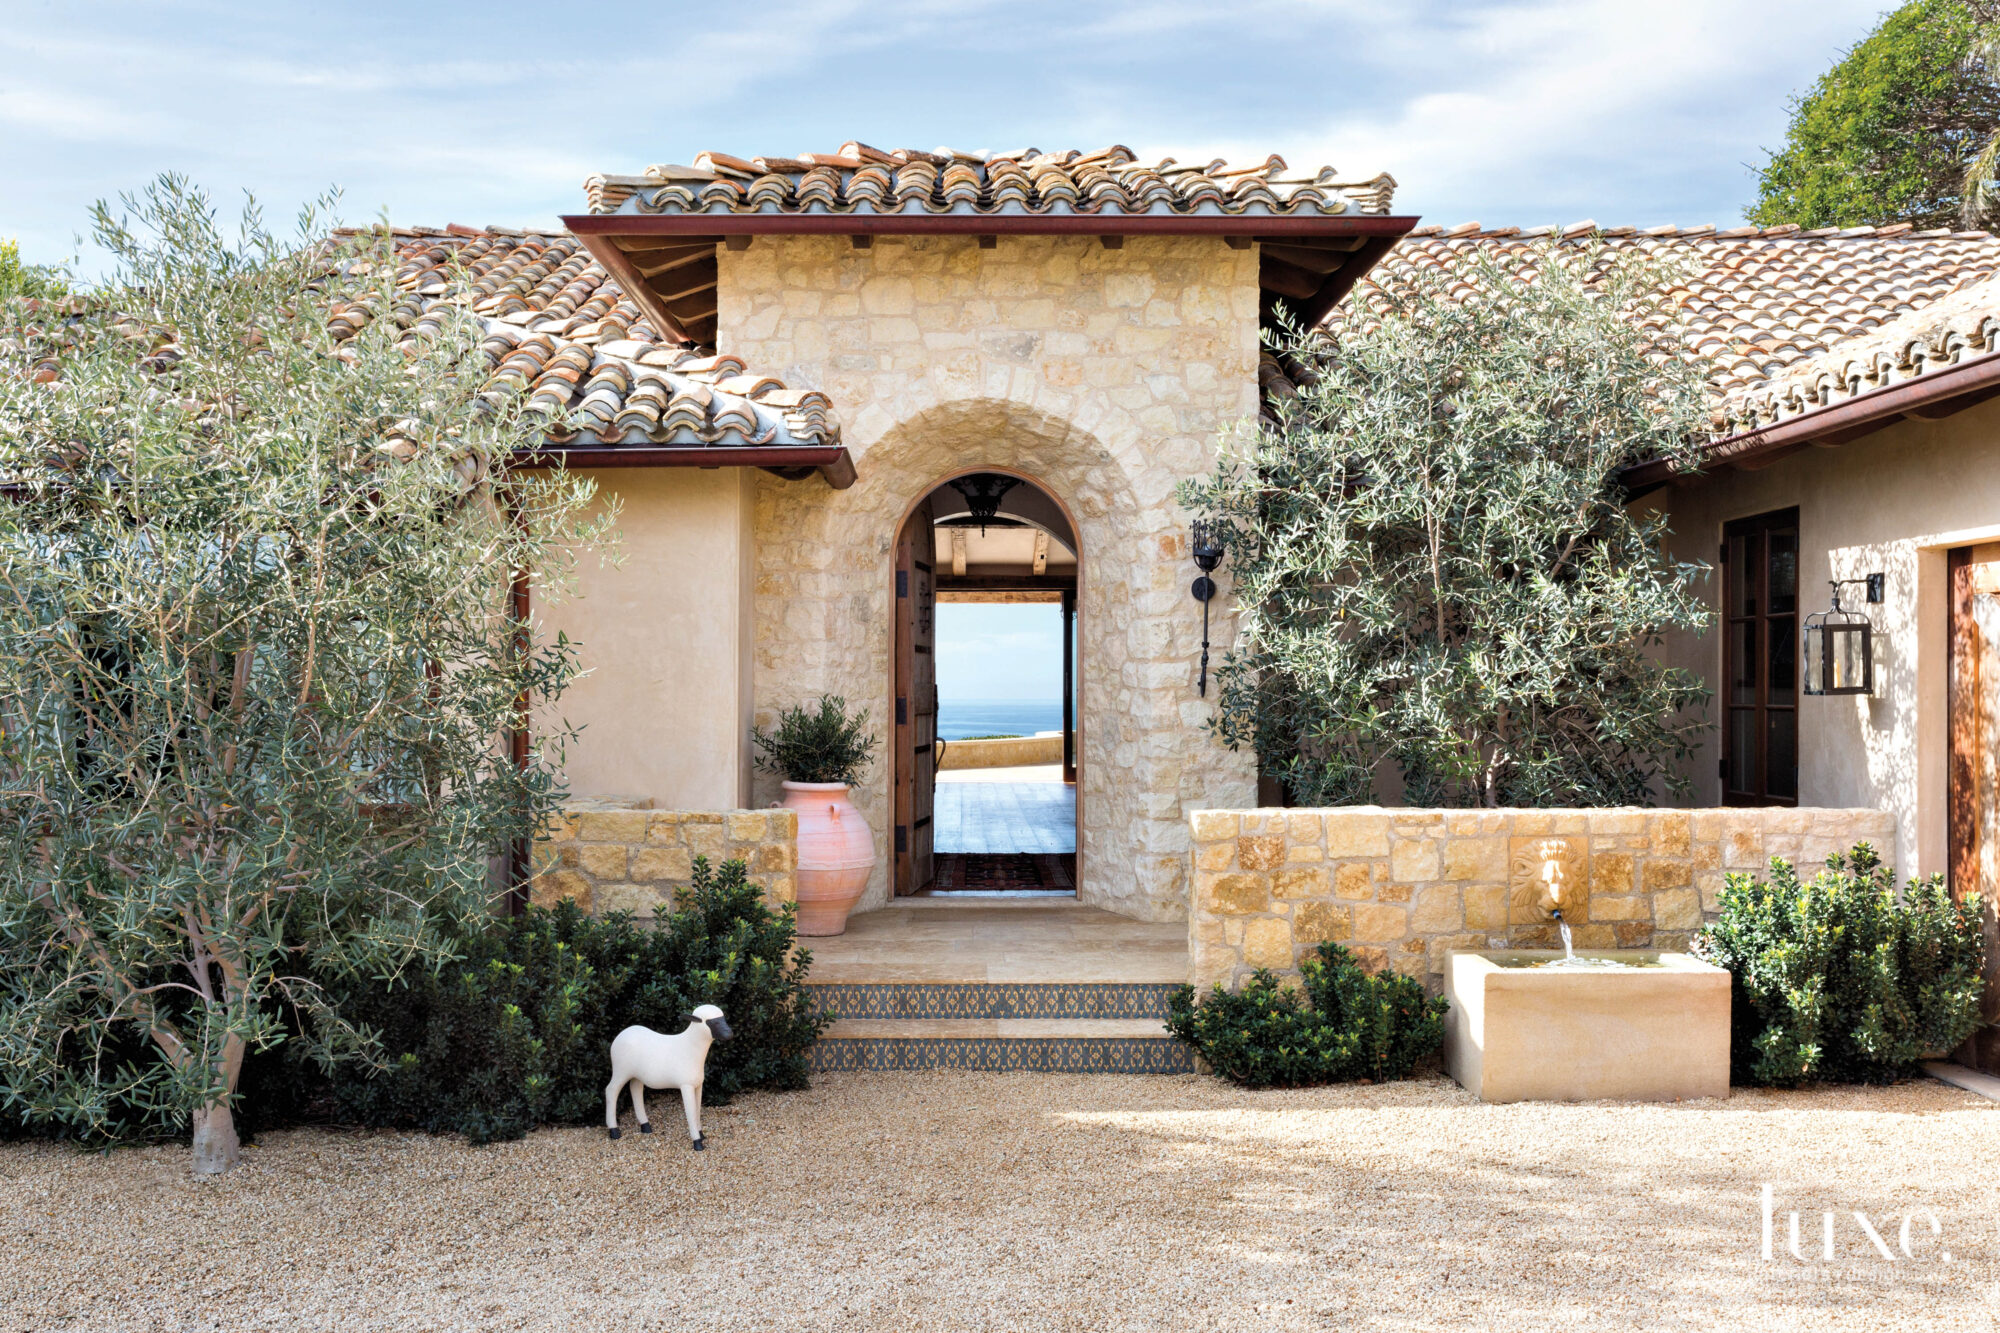 Entry to Mediterranean-style Malibu home...